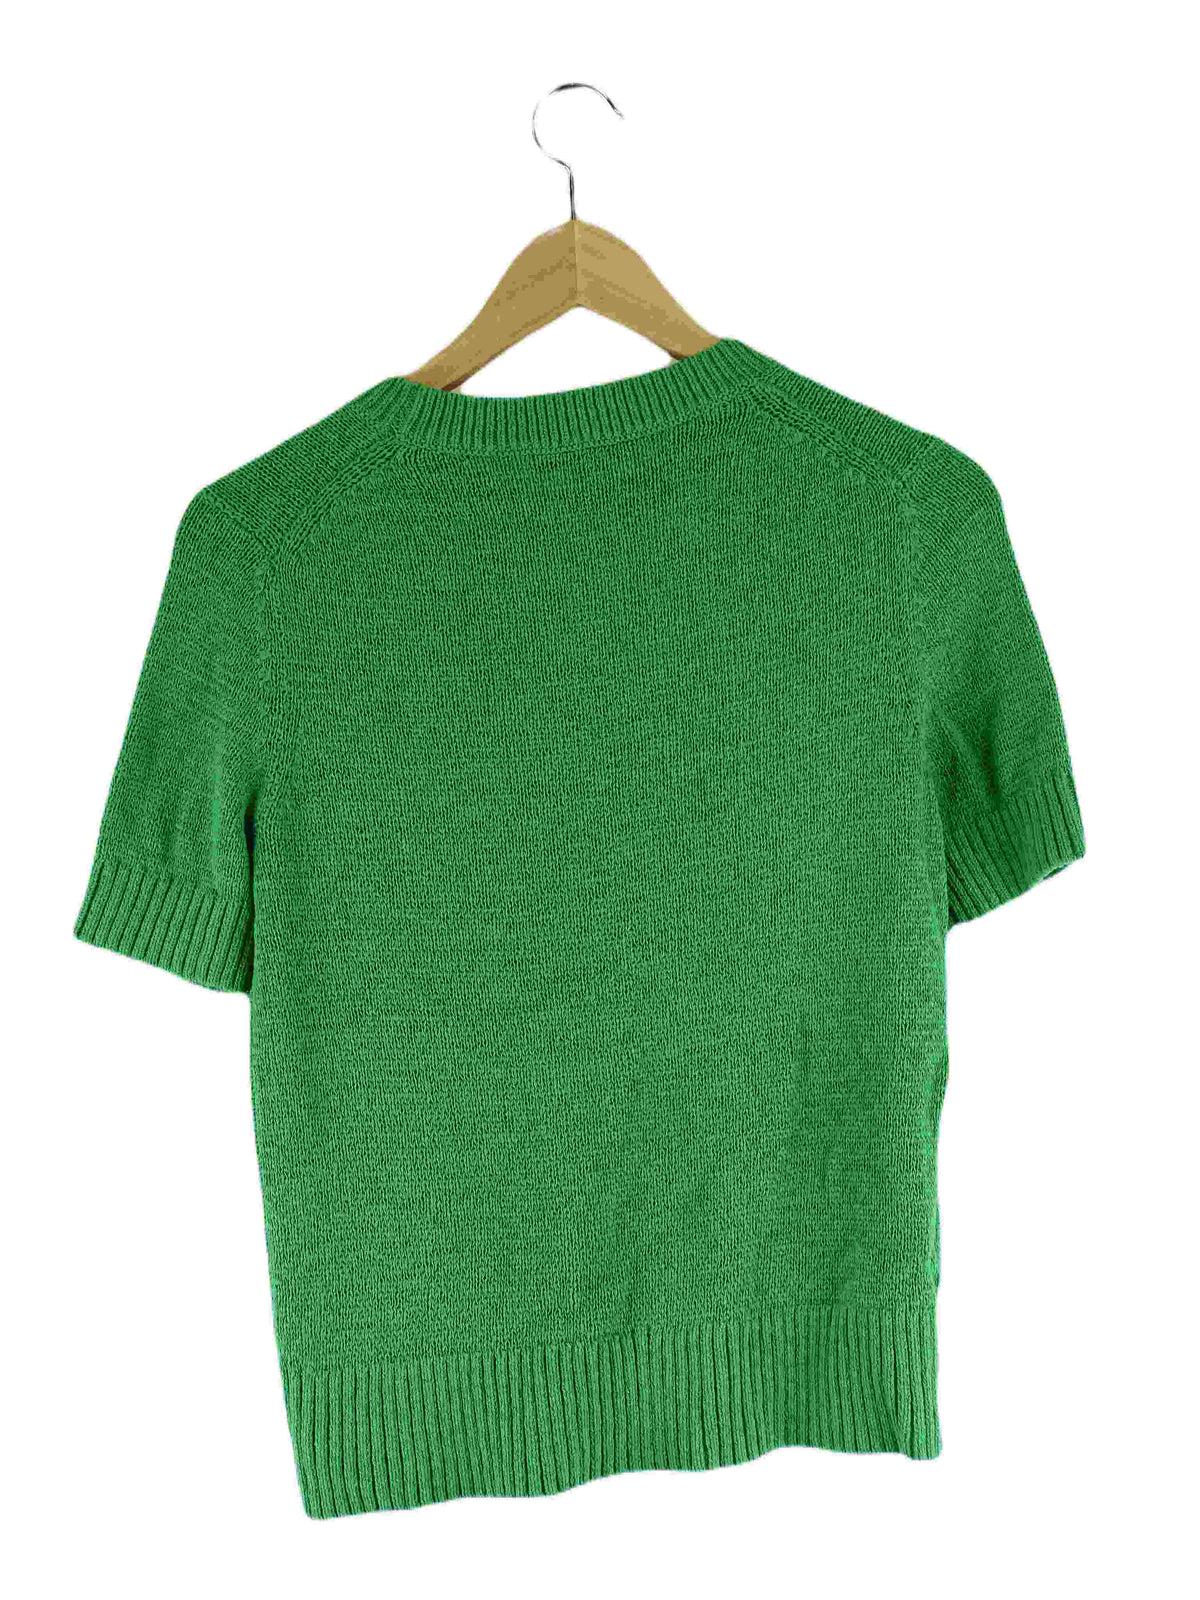 Sportscraft Green Knit Top XS